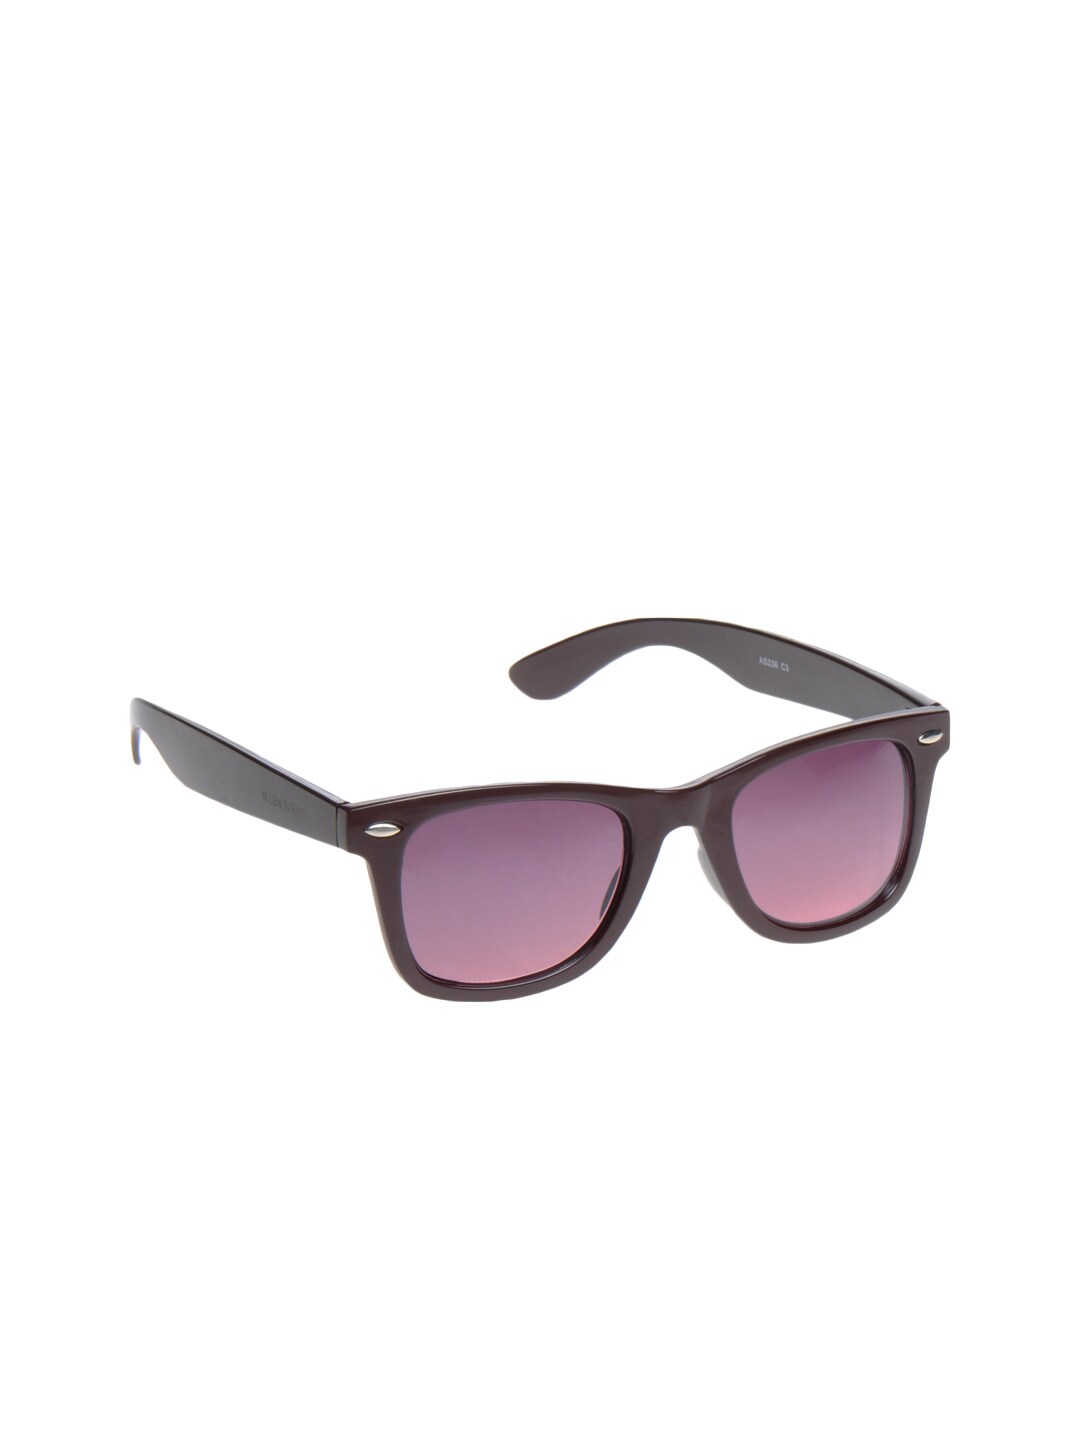 Allen Solly Unisex Sunglasses AS236-C3